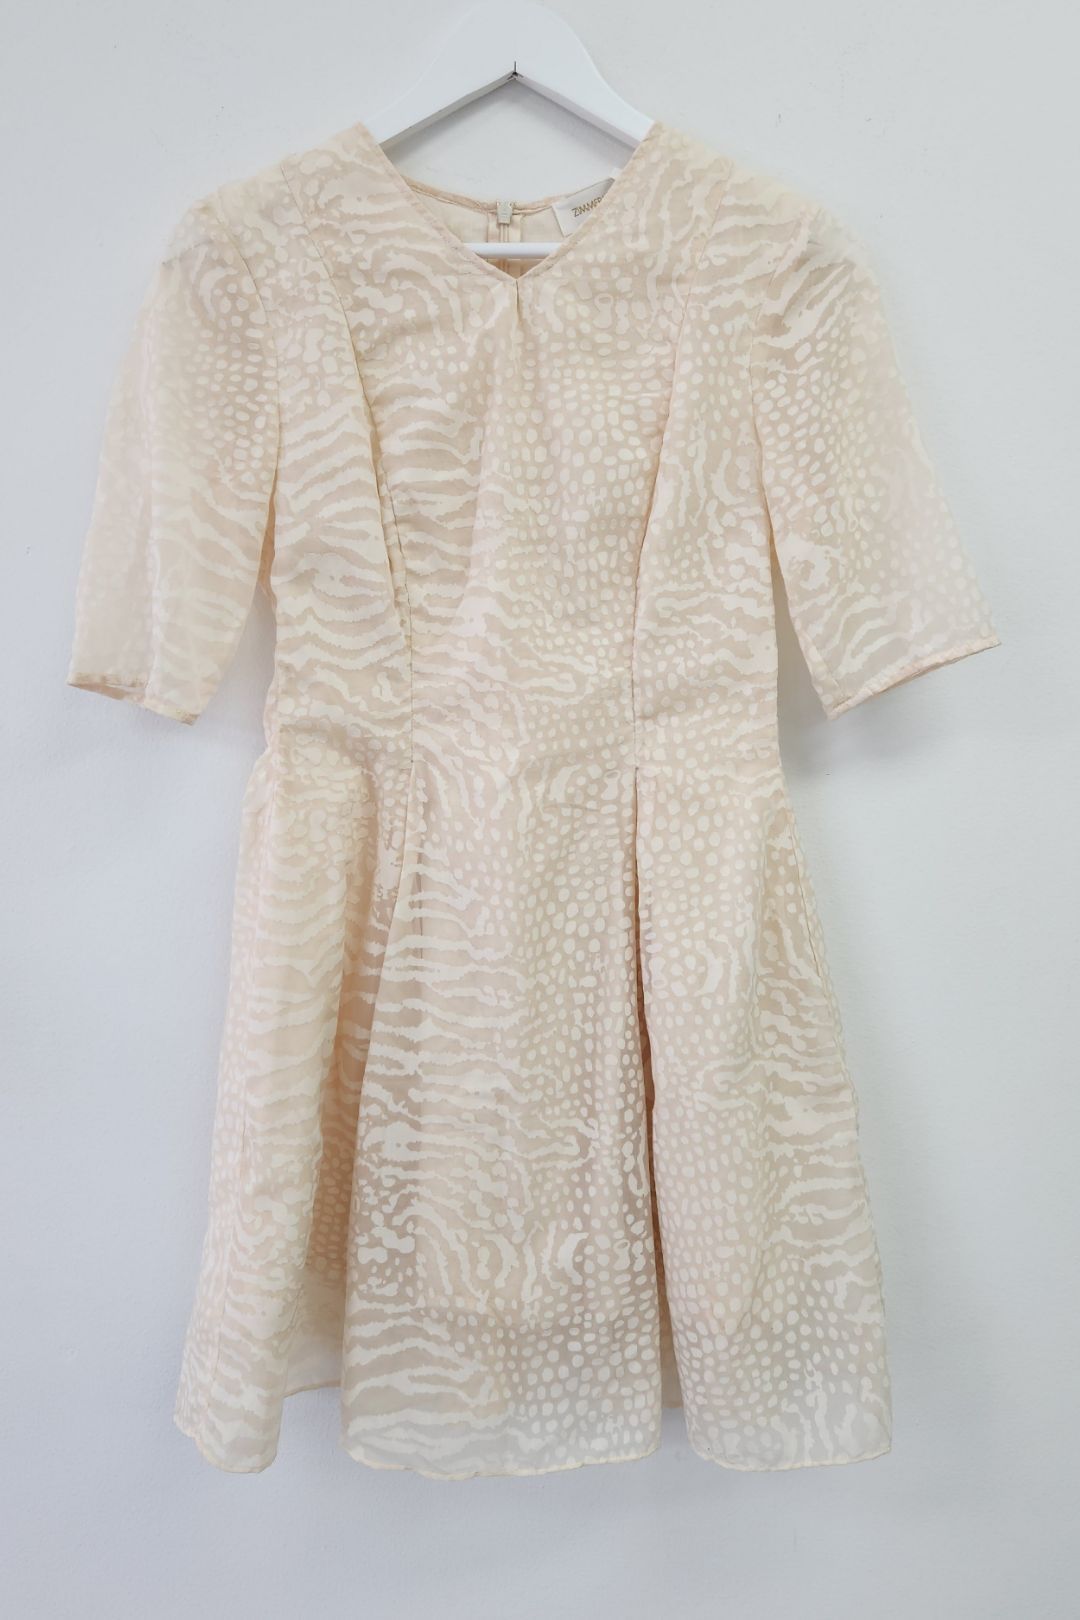 Zimmermann - Cream Short Sleeve Mini Dress